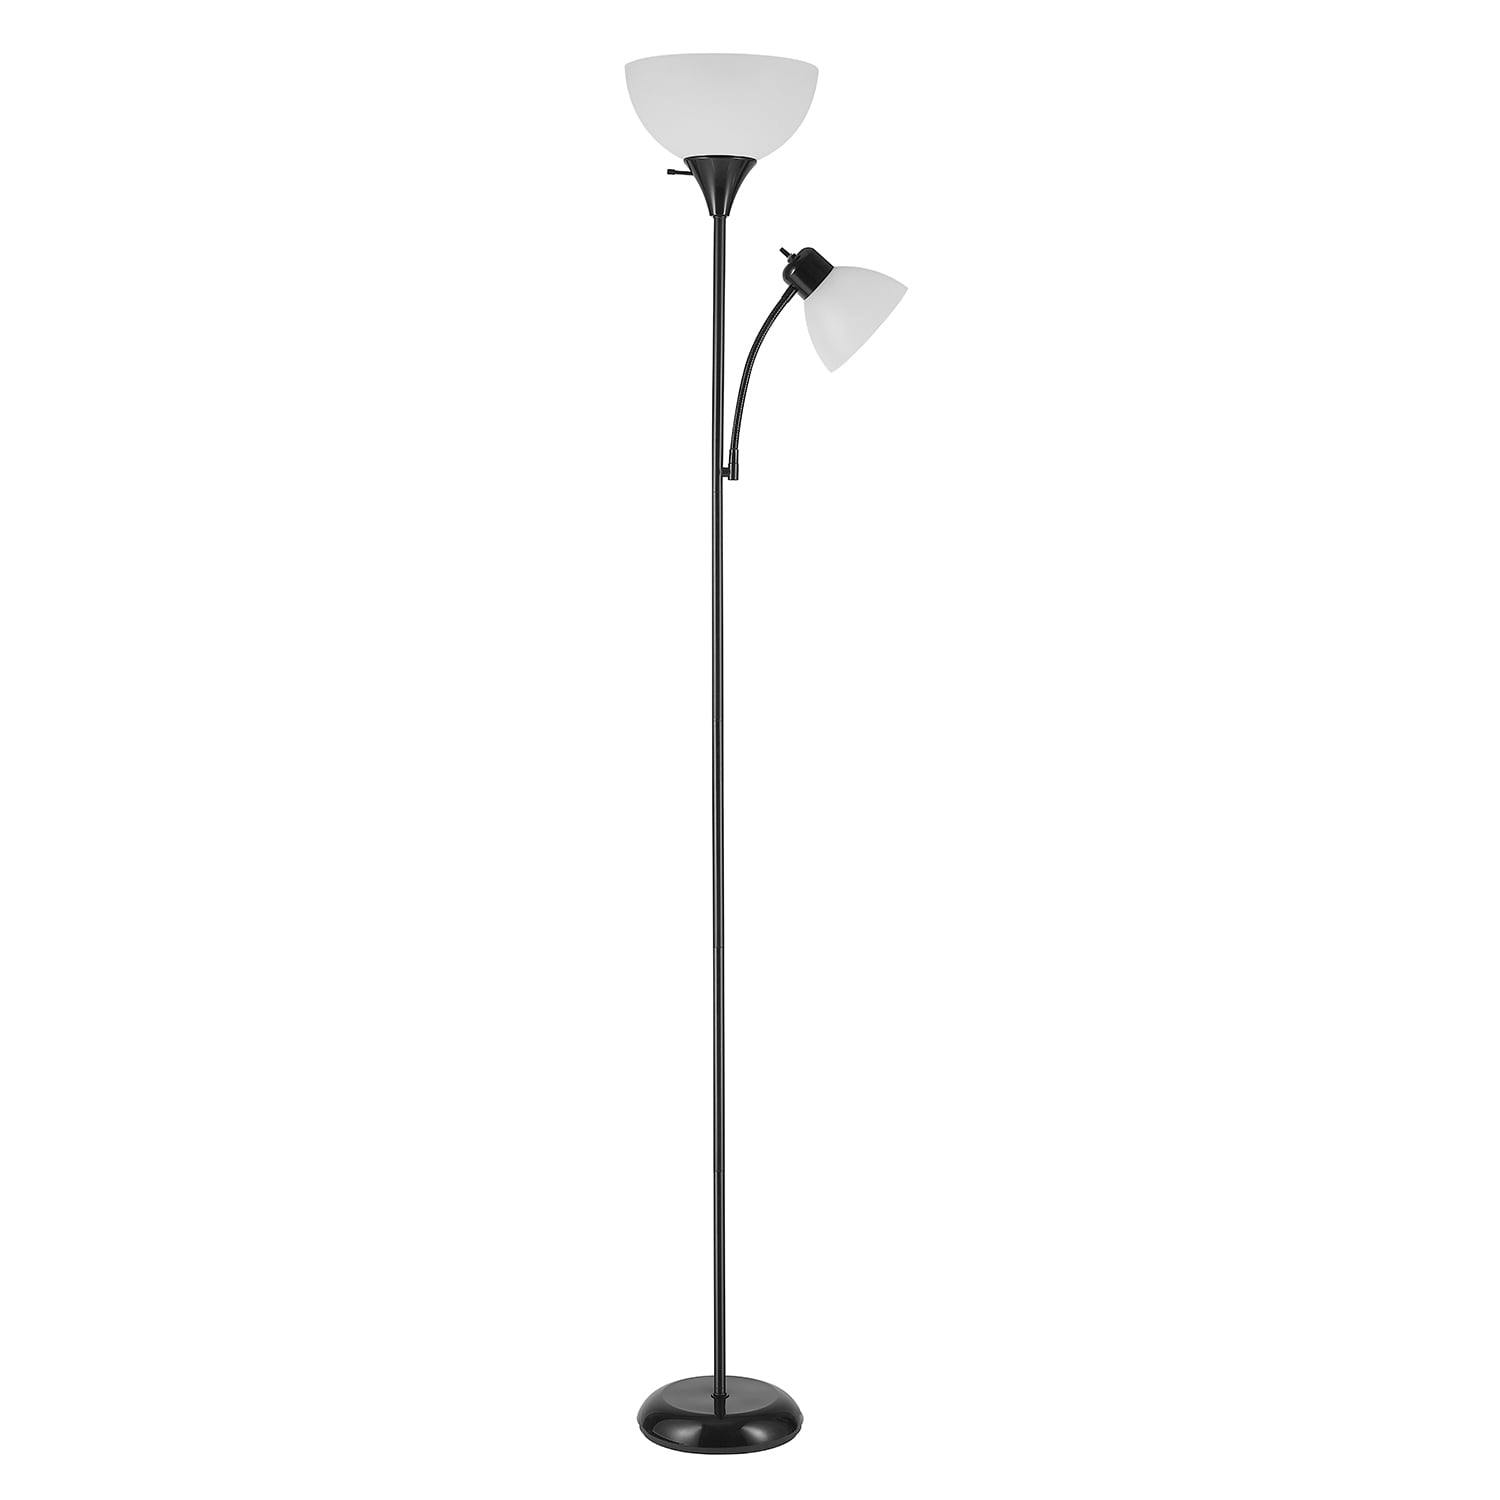 Delilah 72" Matte Black Adjustable Torchiere Floor Lamp with Reading Light